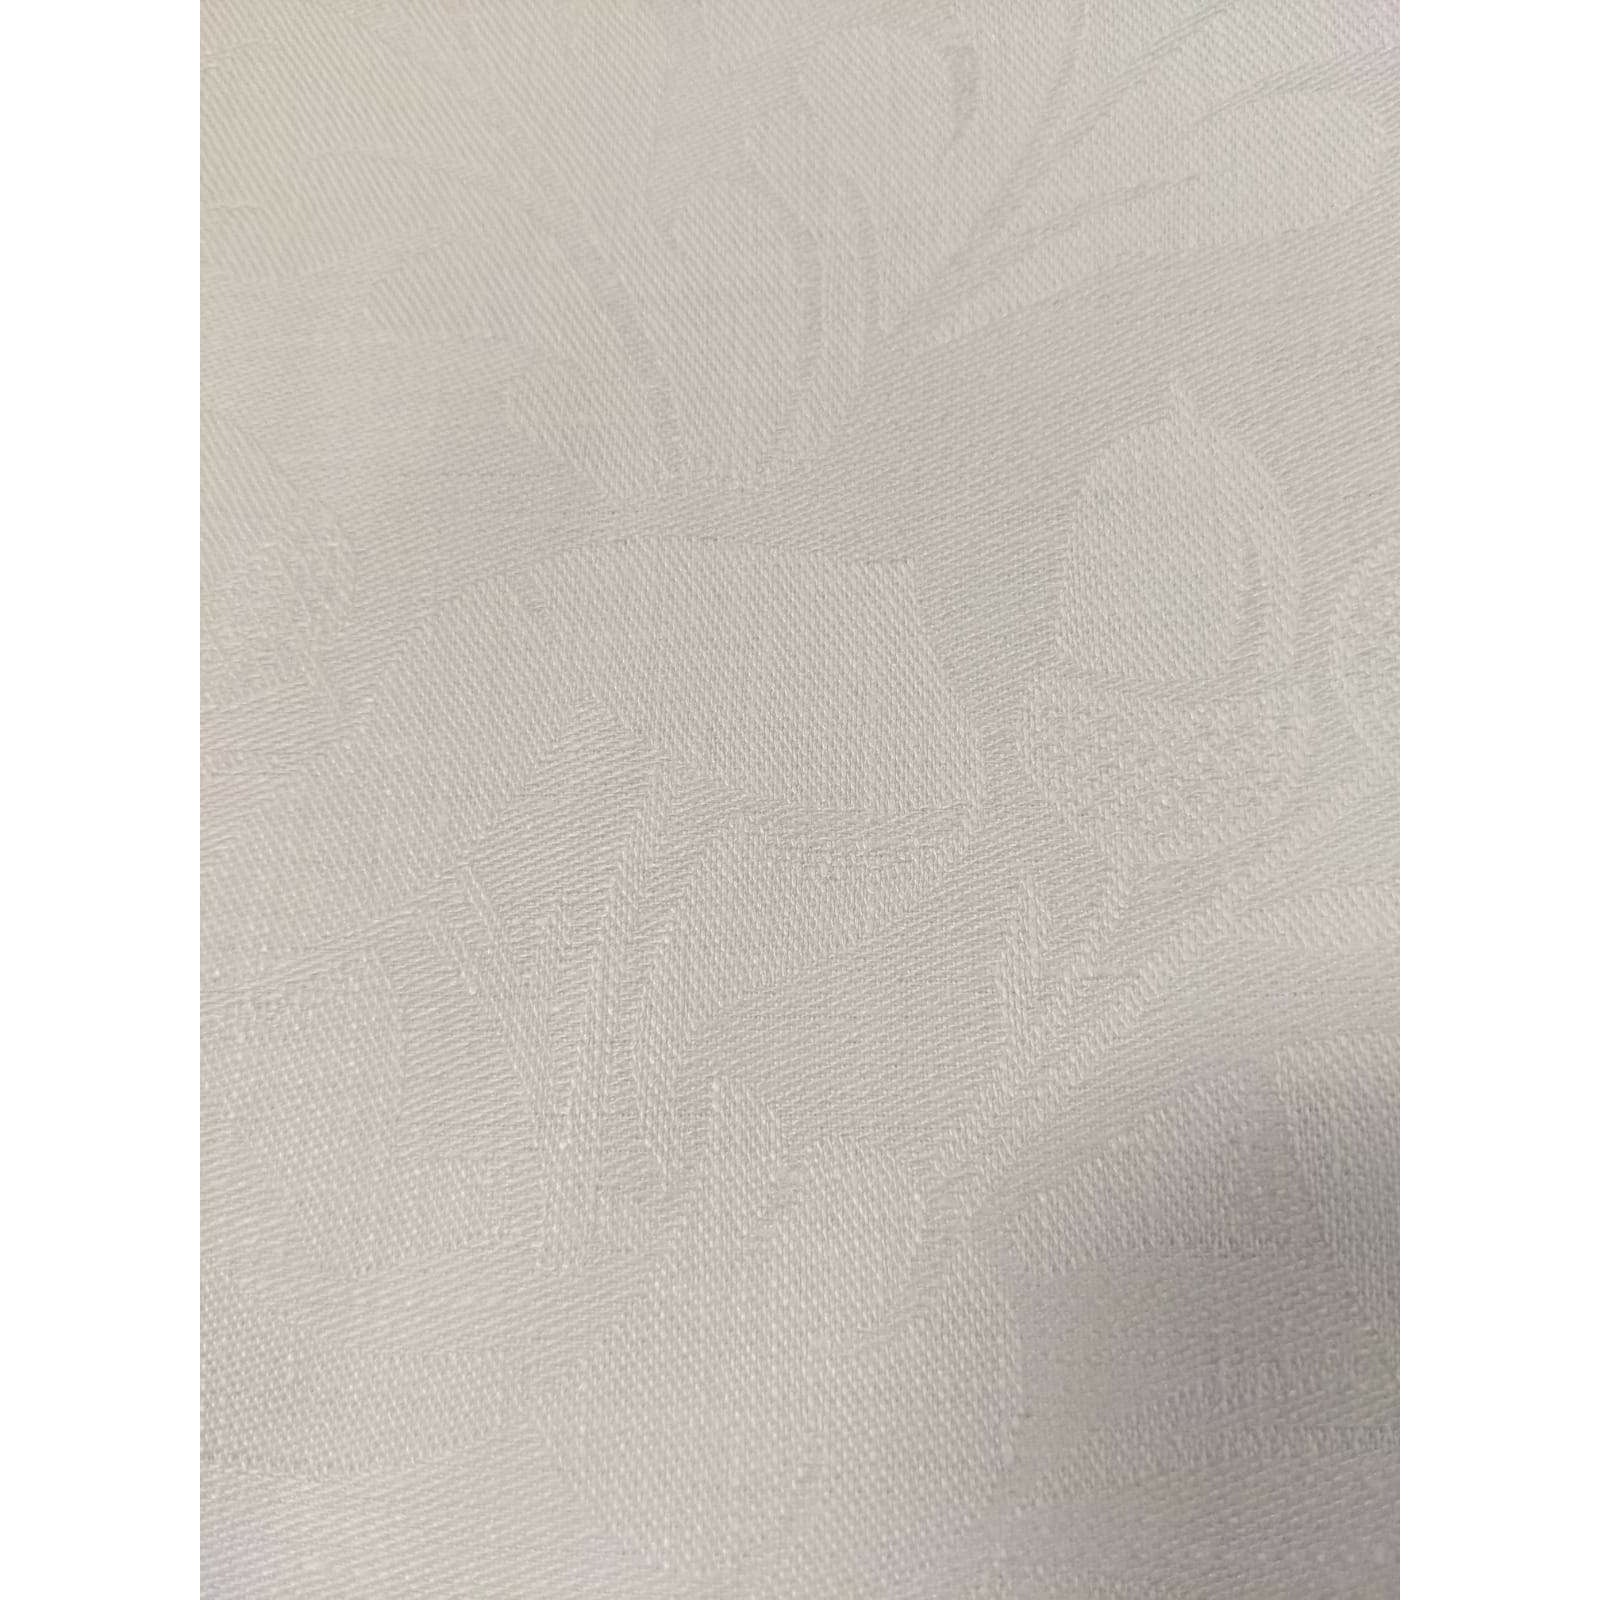 Linen Damask Table Cloth 43"x43"